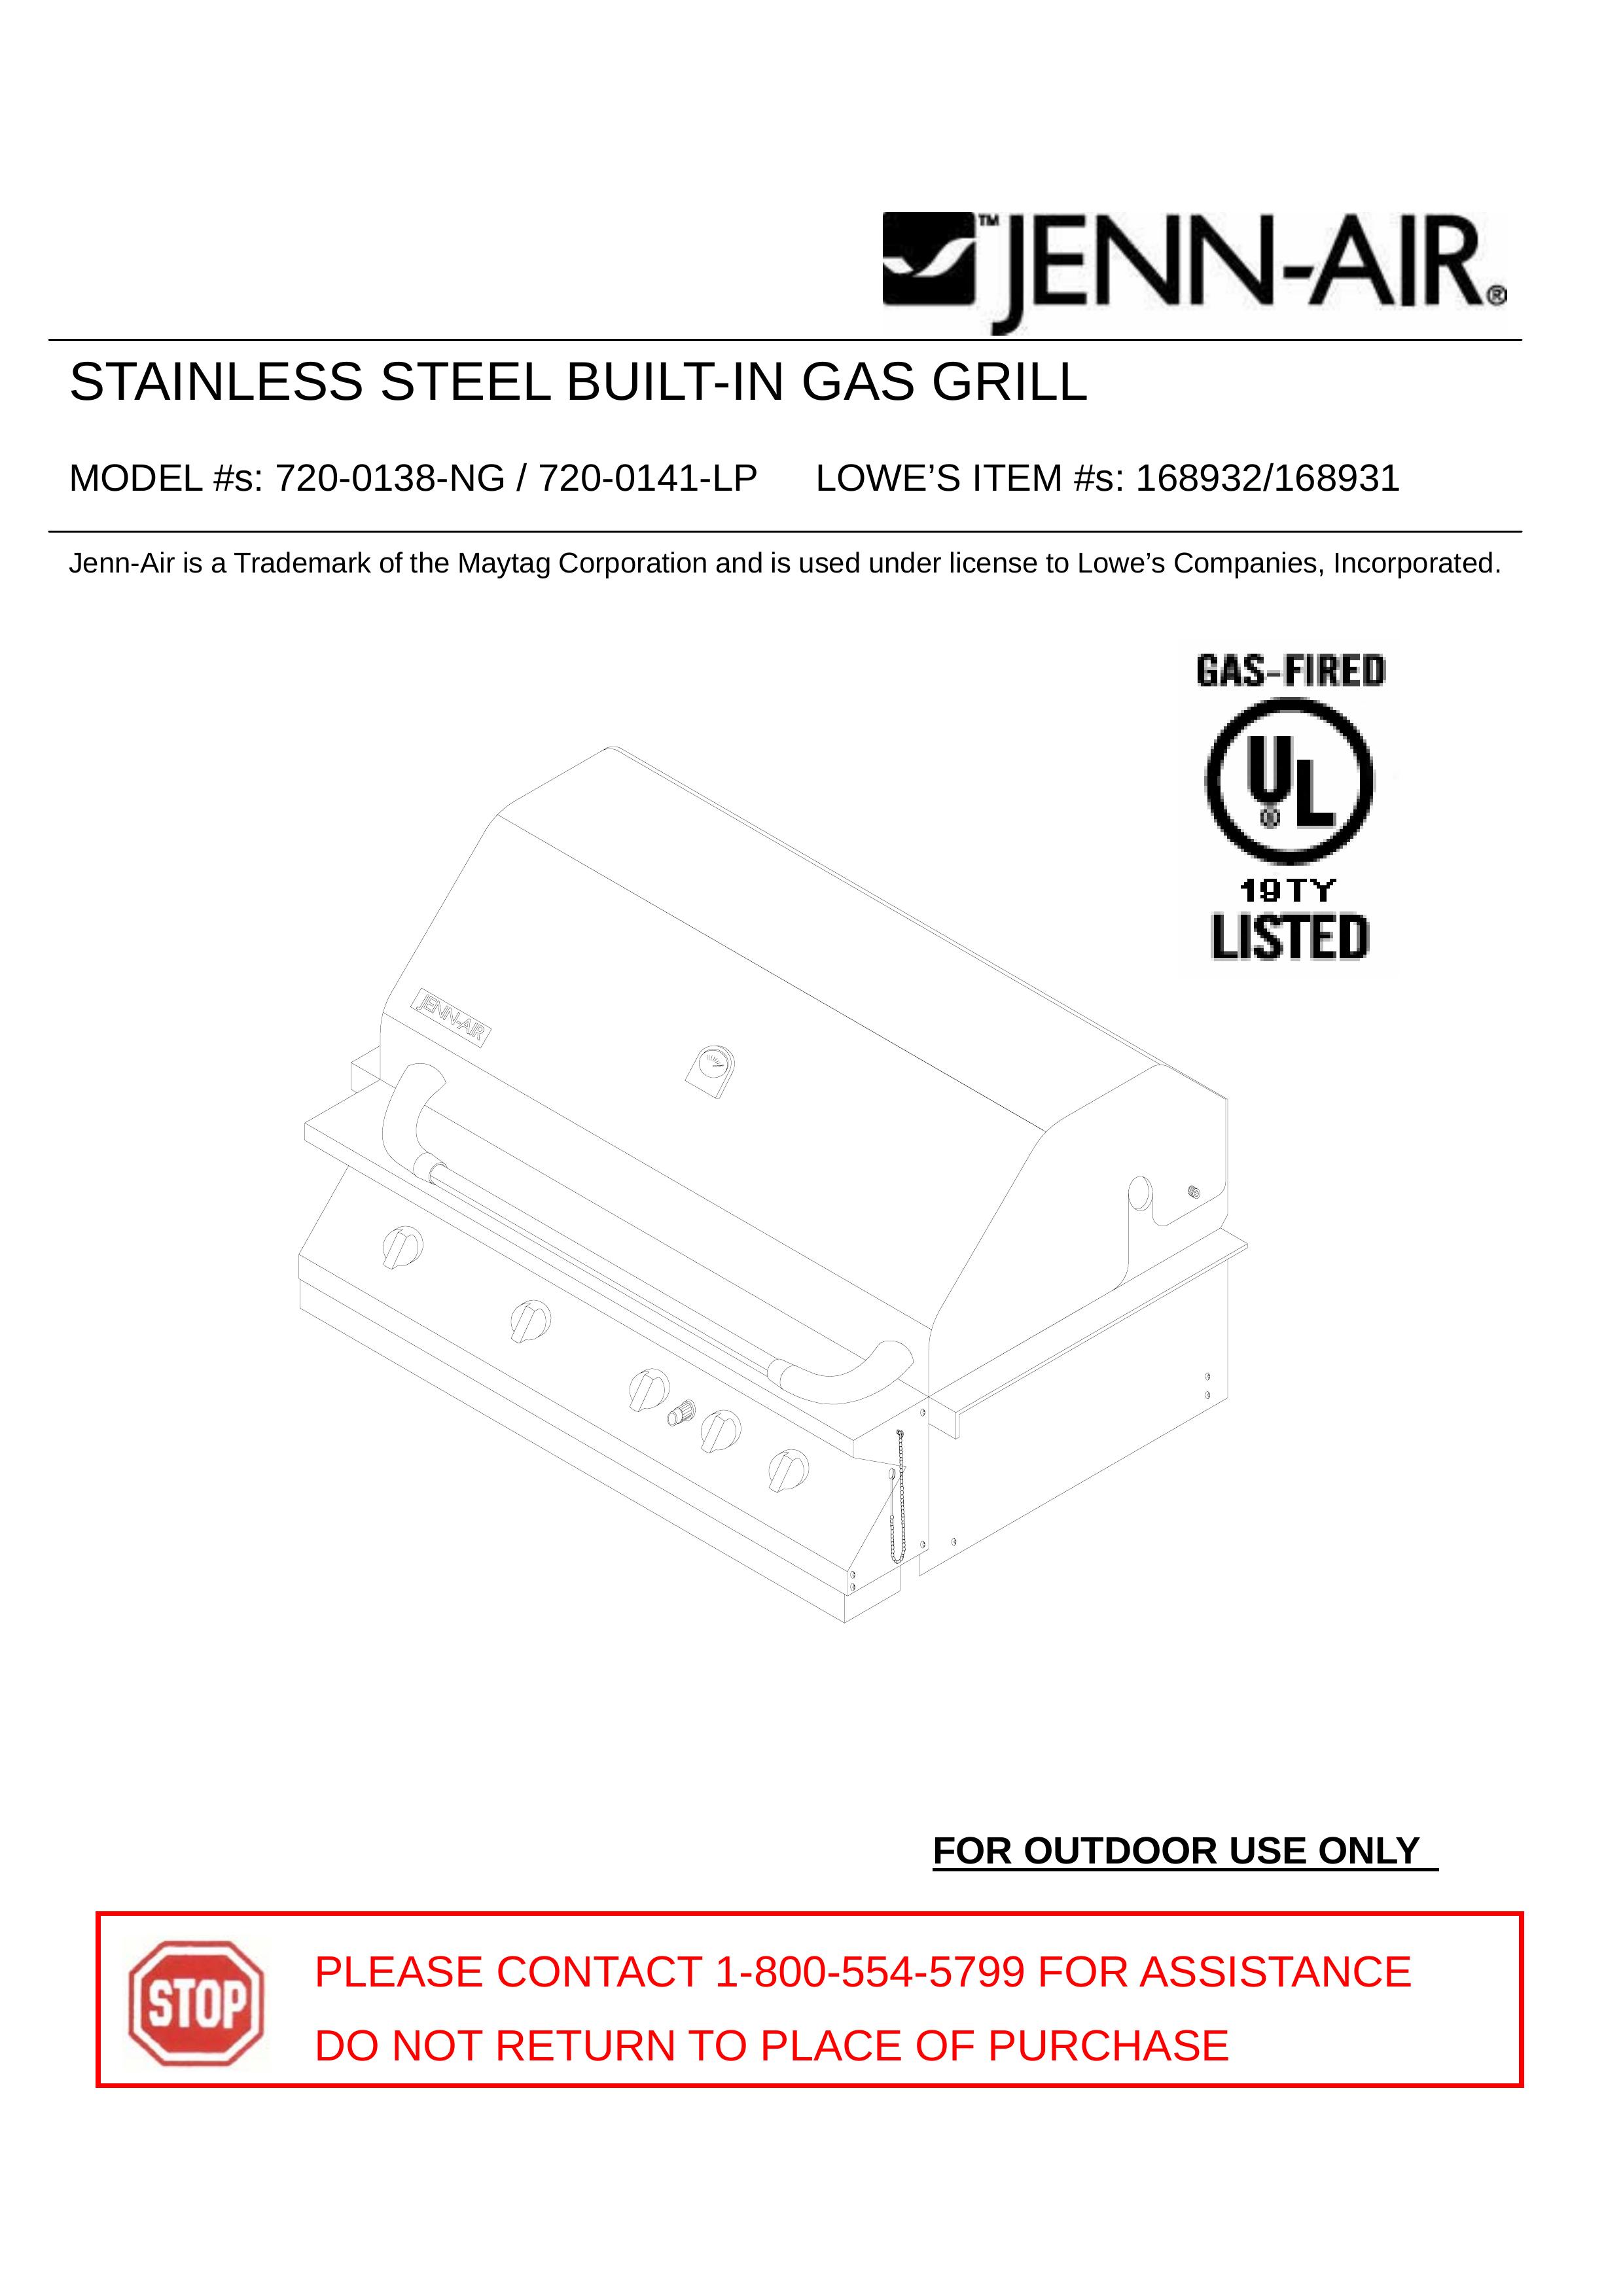 Jenn-Air 720-0141-LP Gas Grill User Manual